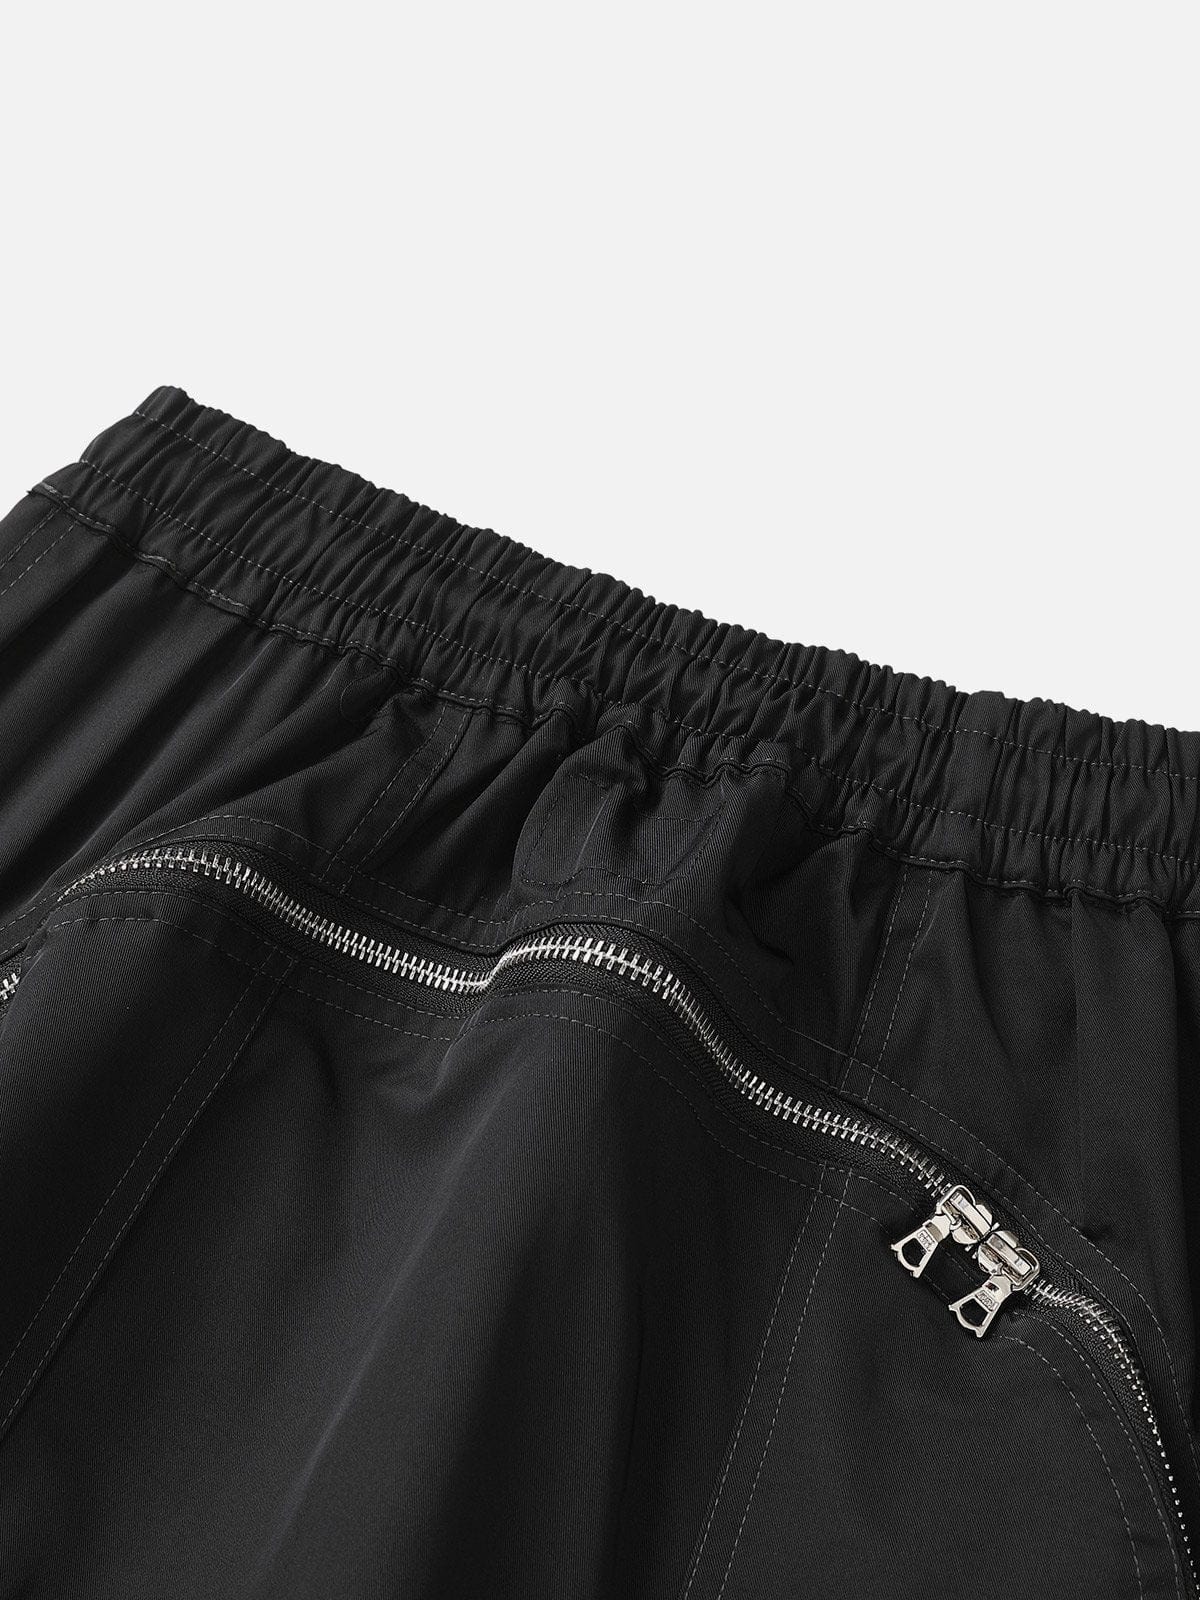 NEV Multi-Zip Elastic Band Shorts